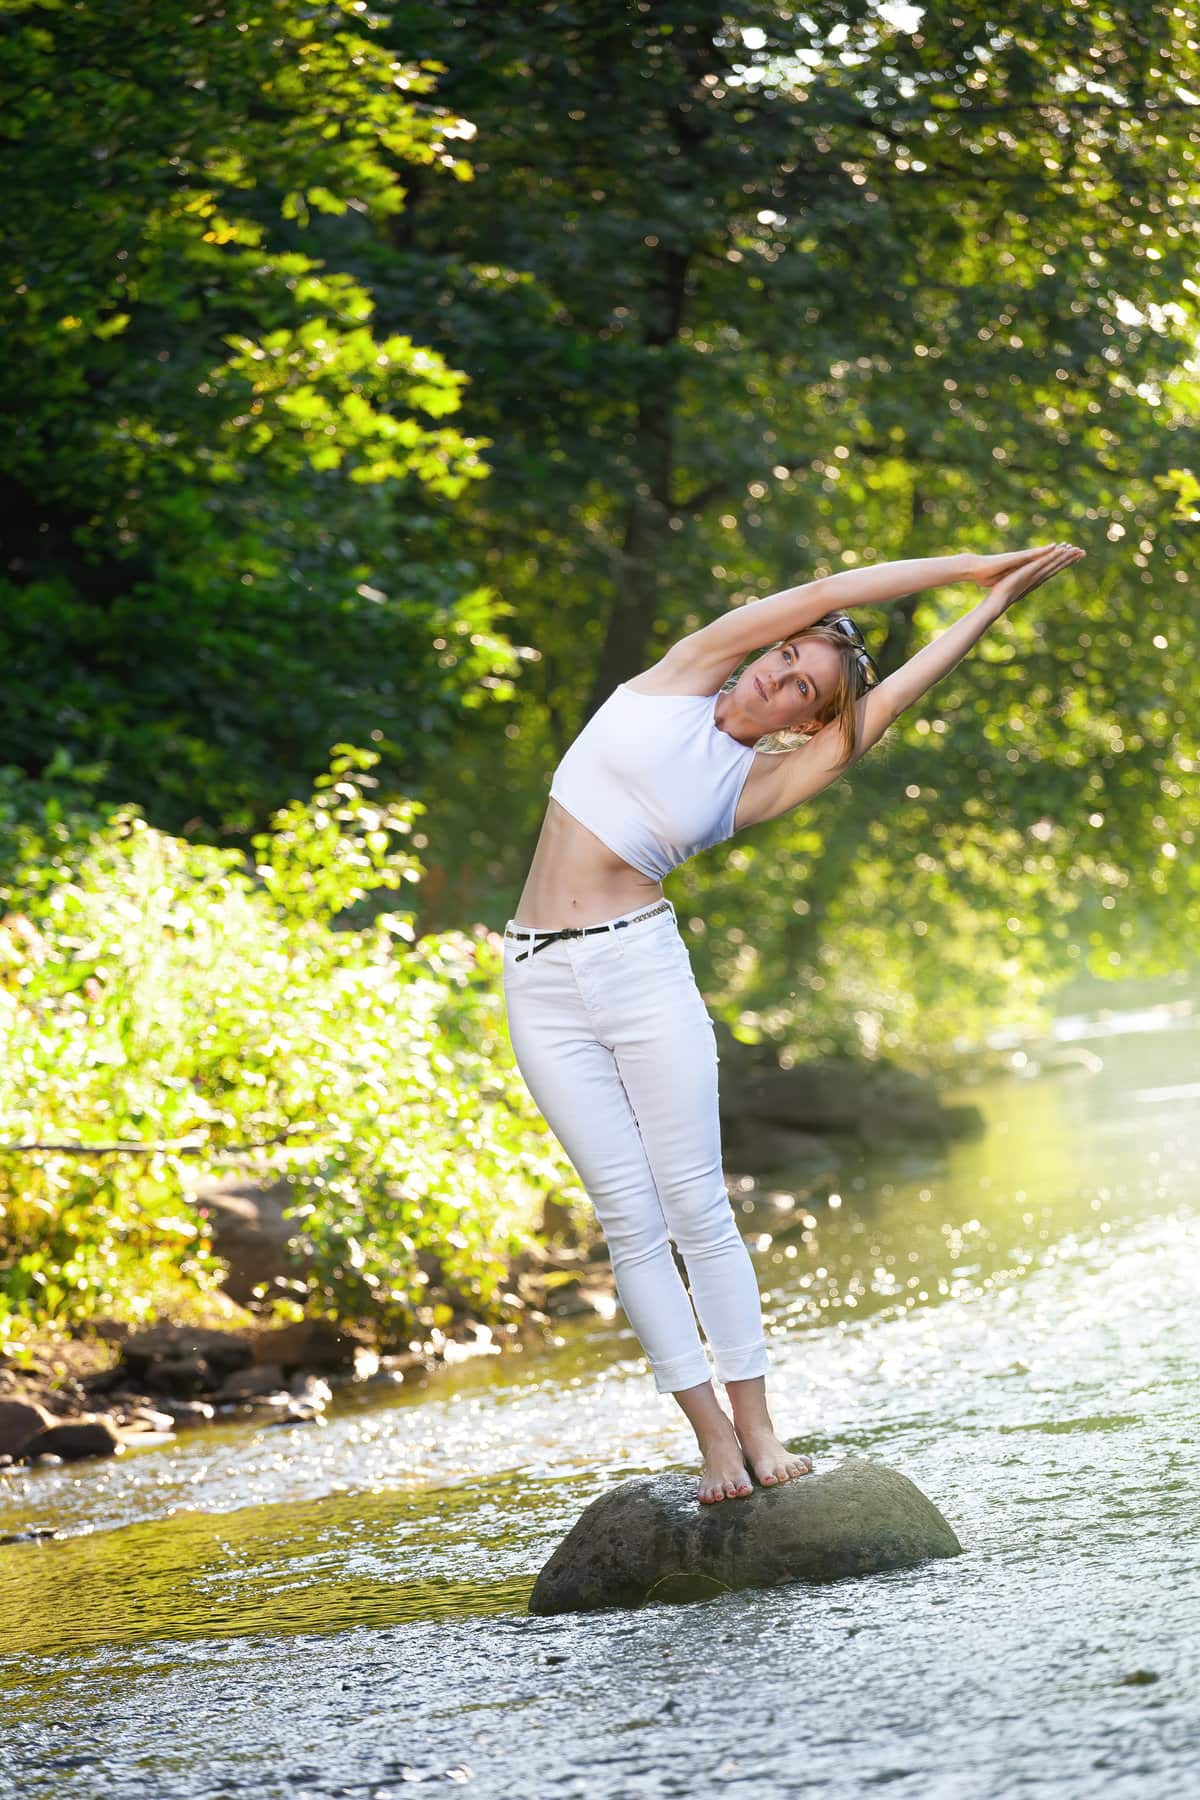 Ardha Chandrasana (Half Moon) Yoga Posture